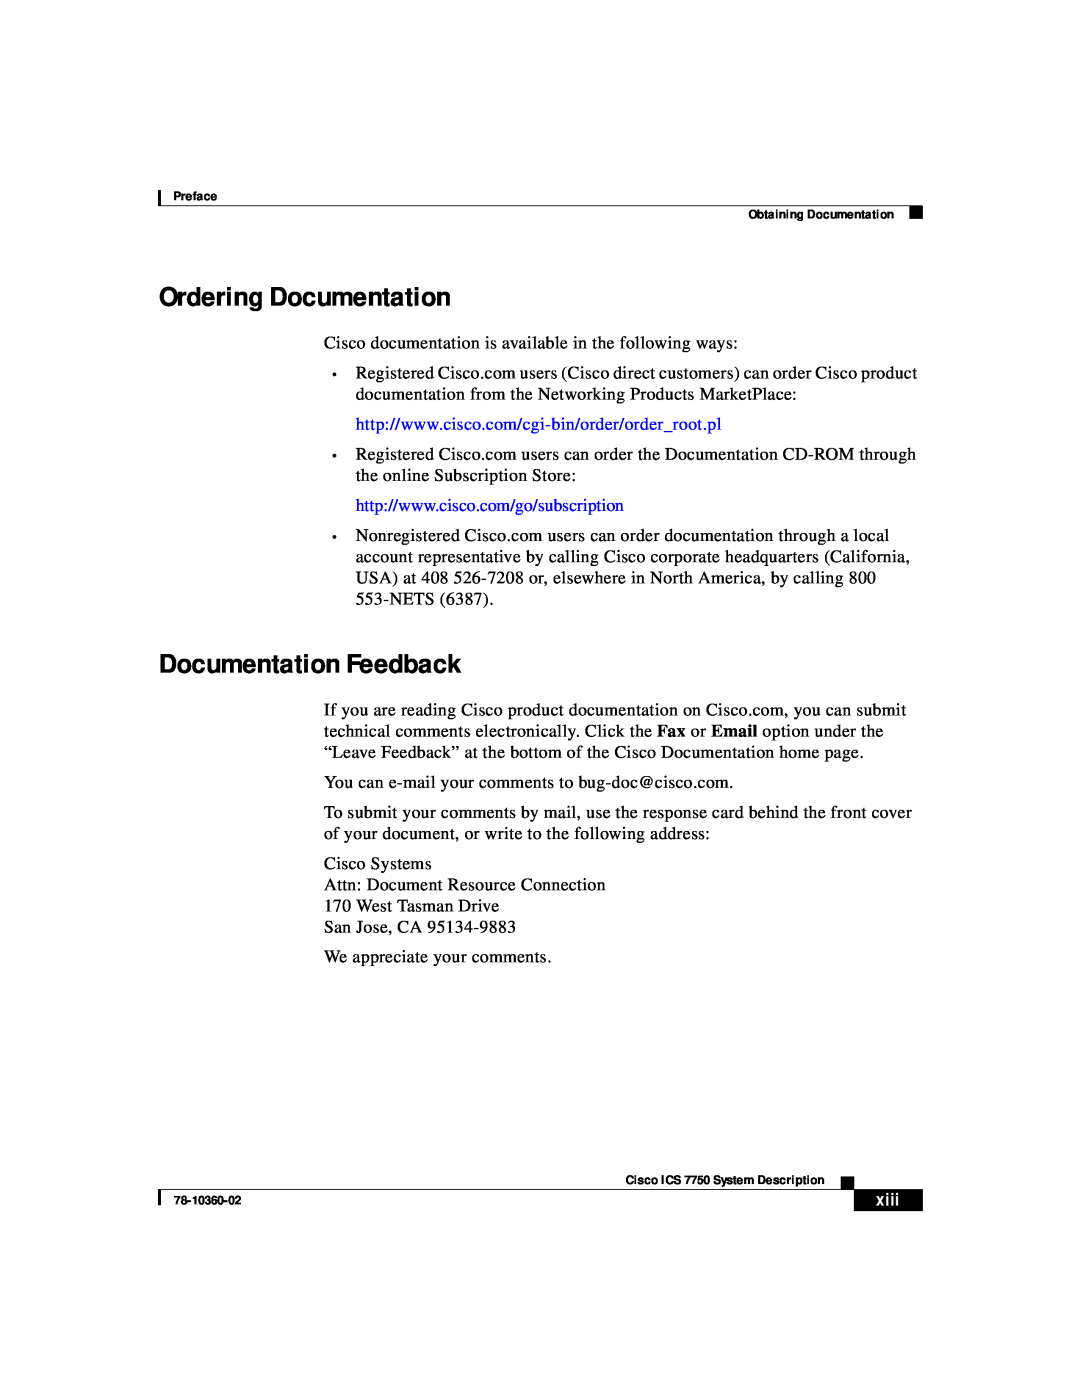 Cisco Systems ICS-7750 manual Ordering Documentation, Documentation Feedback, xiii 